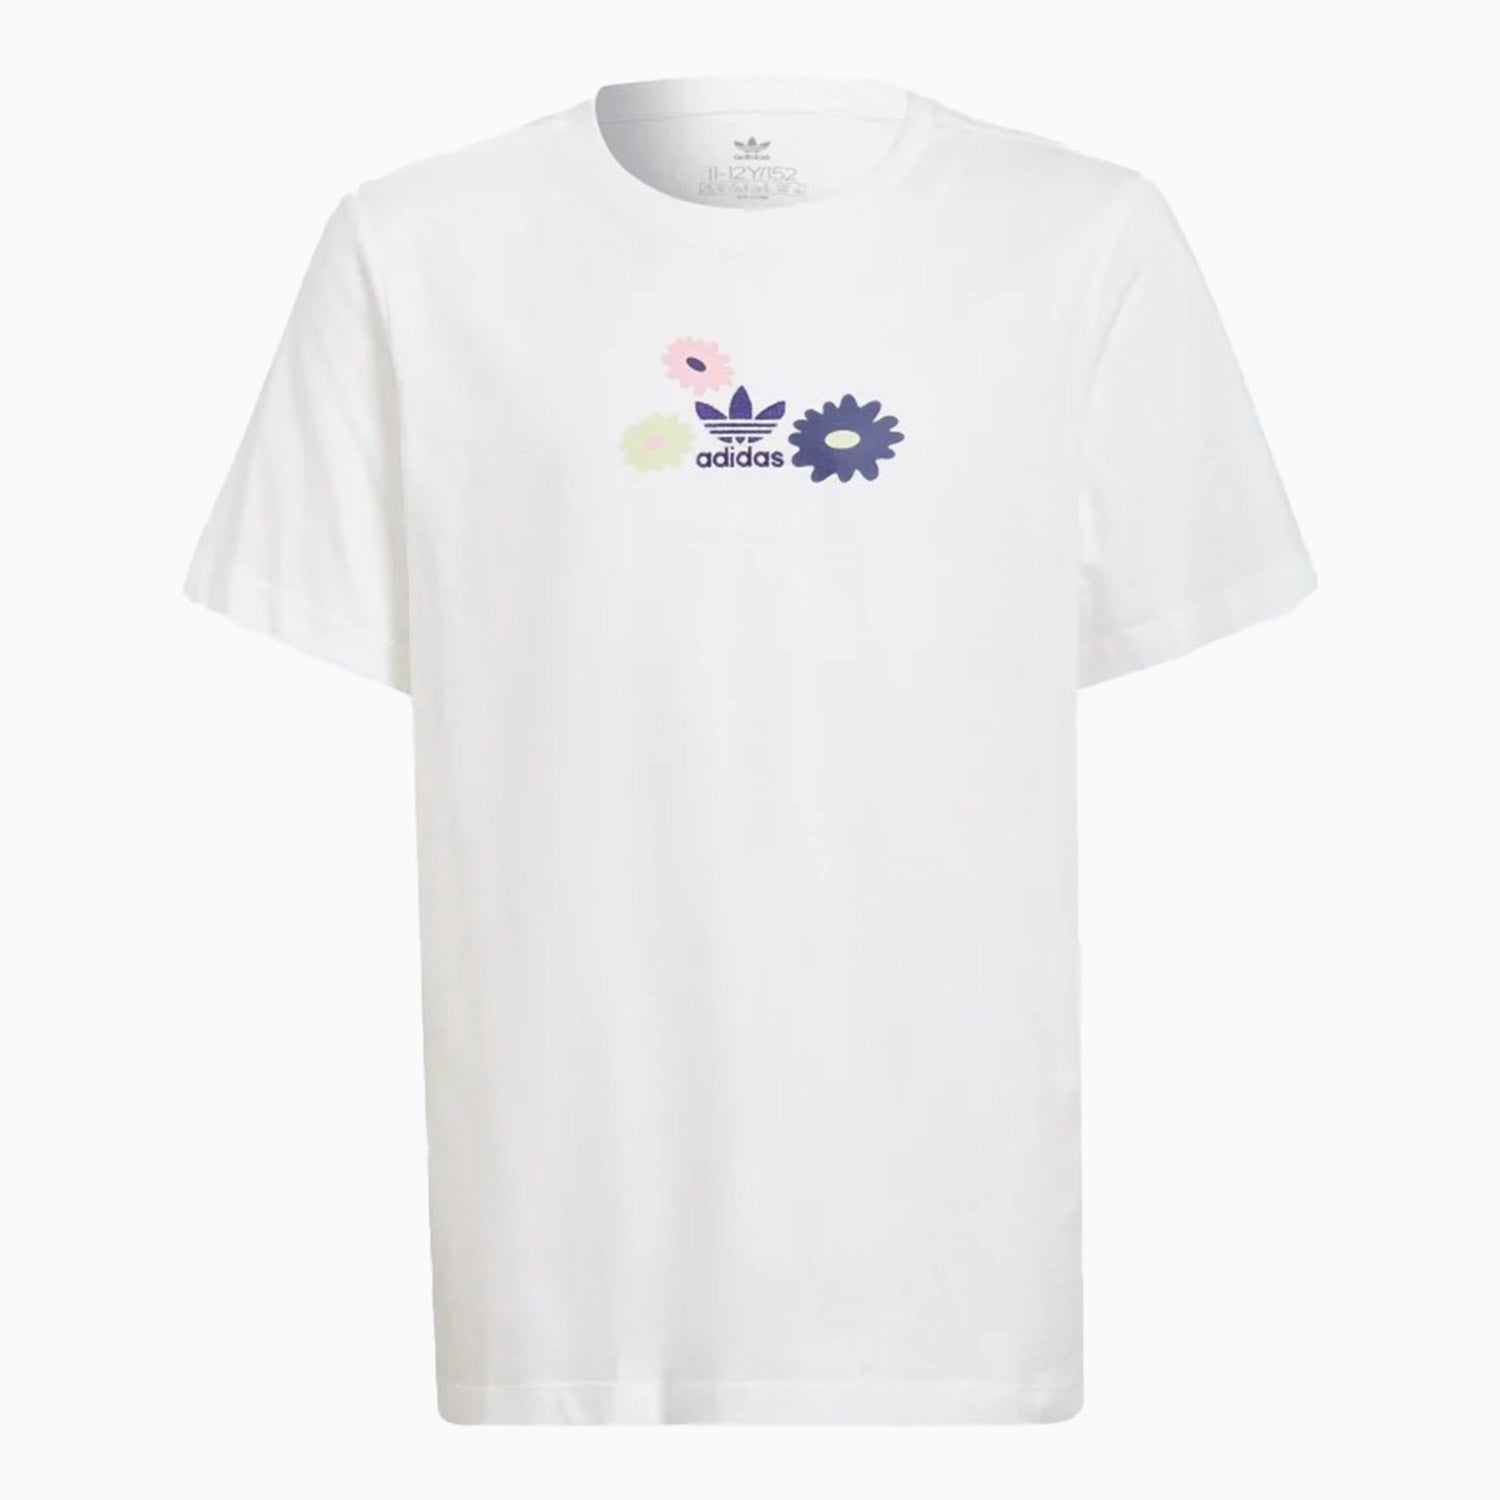 adidas-kids-flower-print-t-shirt-hf7467